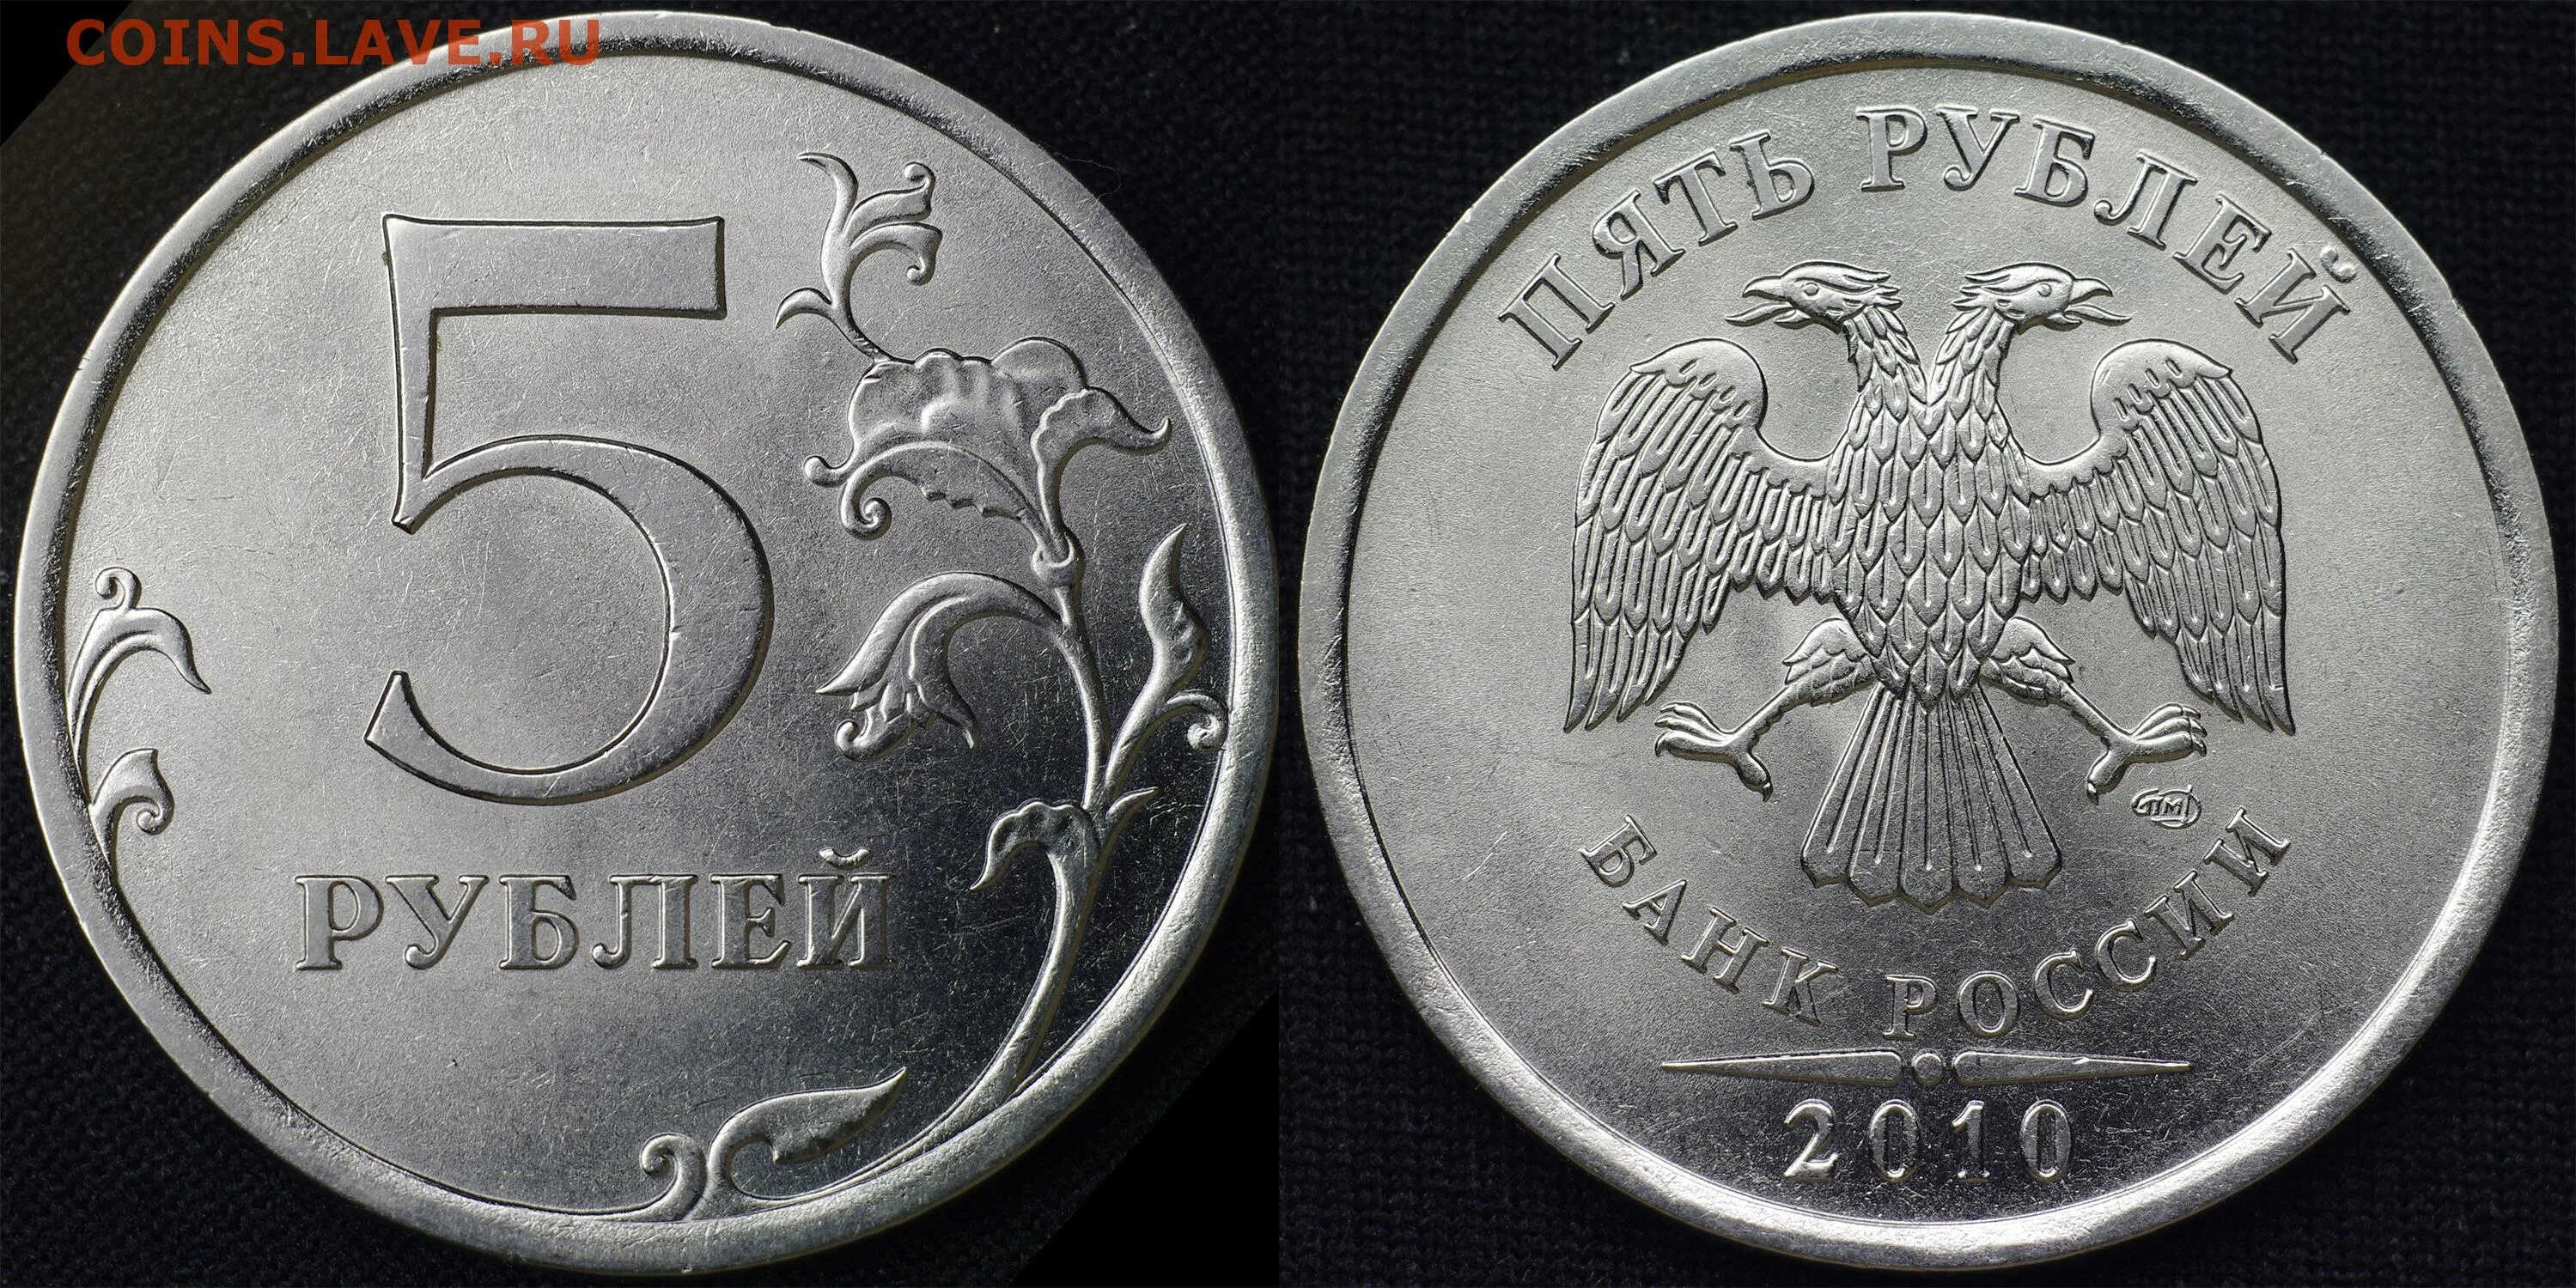 5 Рублей 2010 СПМД. Монета 5 рублей 2010. 5 Рублевая монета 2010 года. Редкая монета 5 рублей 2010 года.